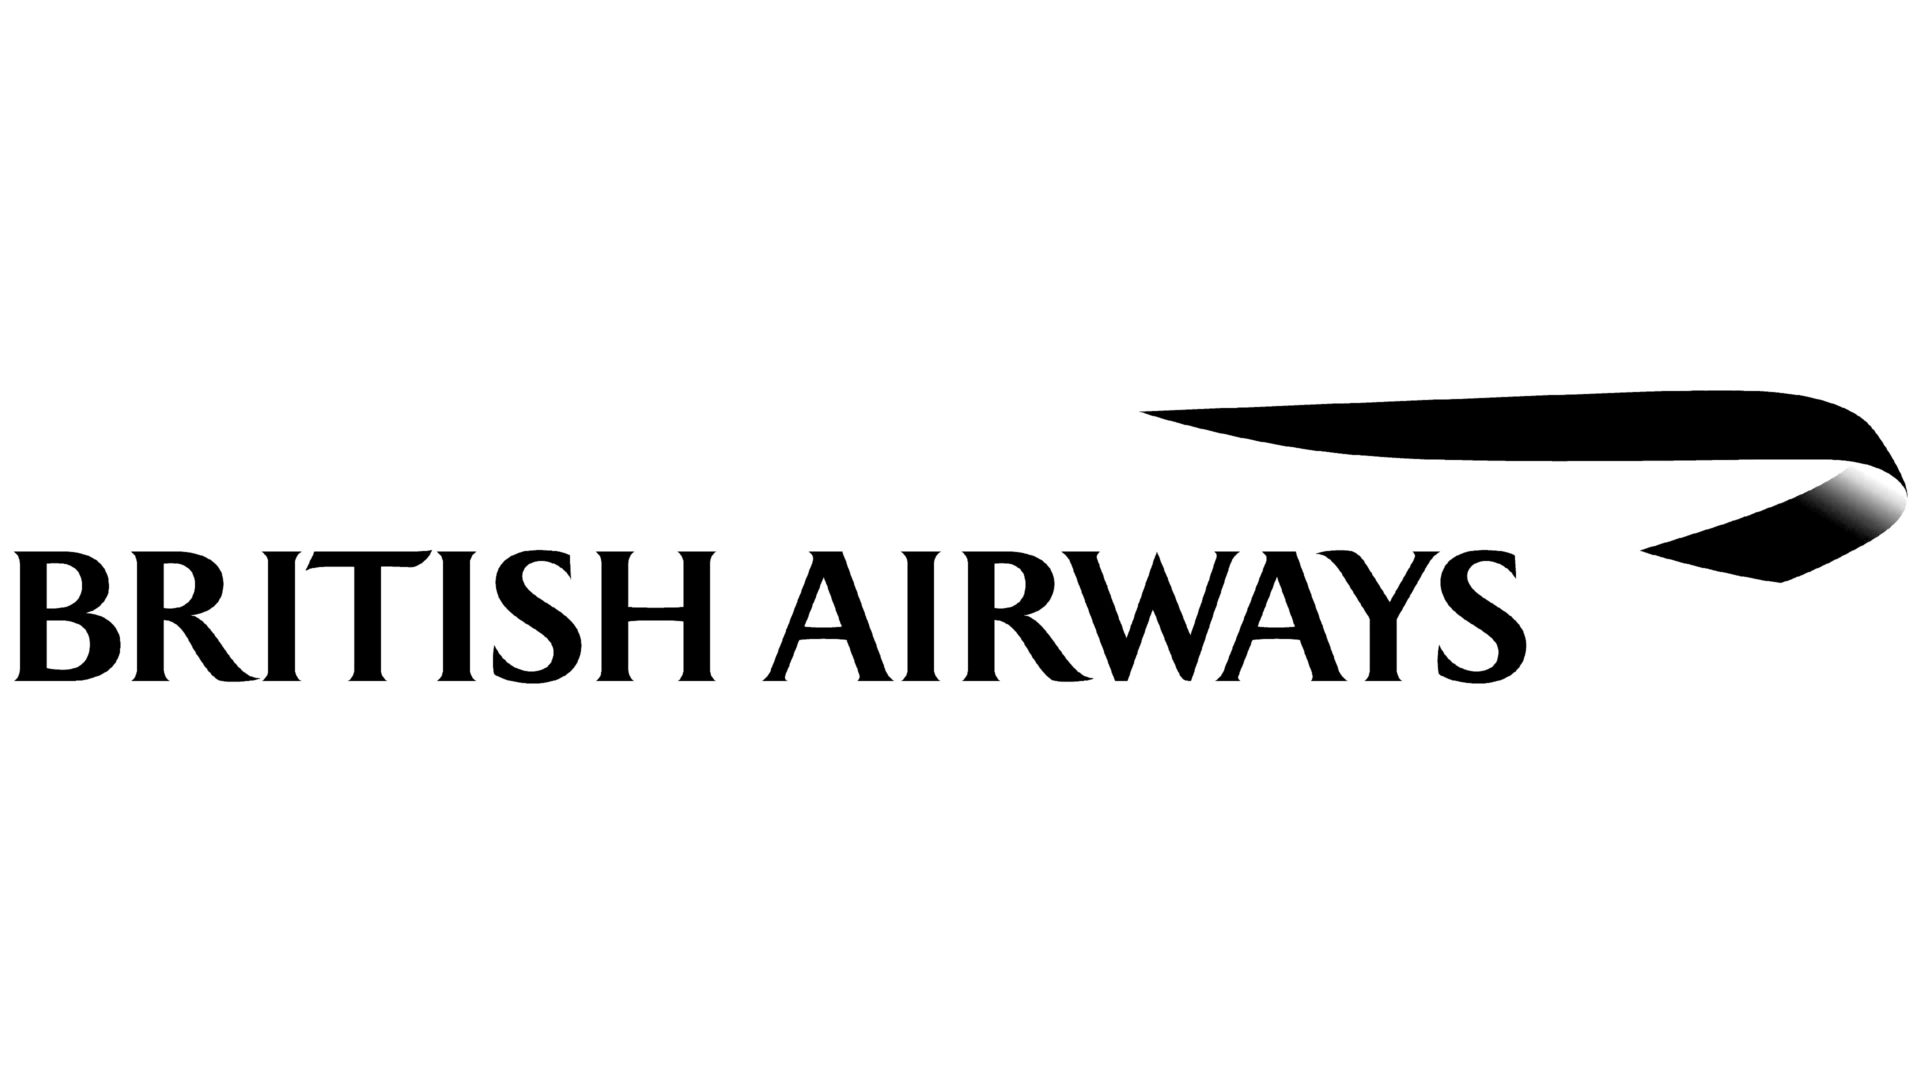 Black and white British Airways logo with text